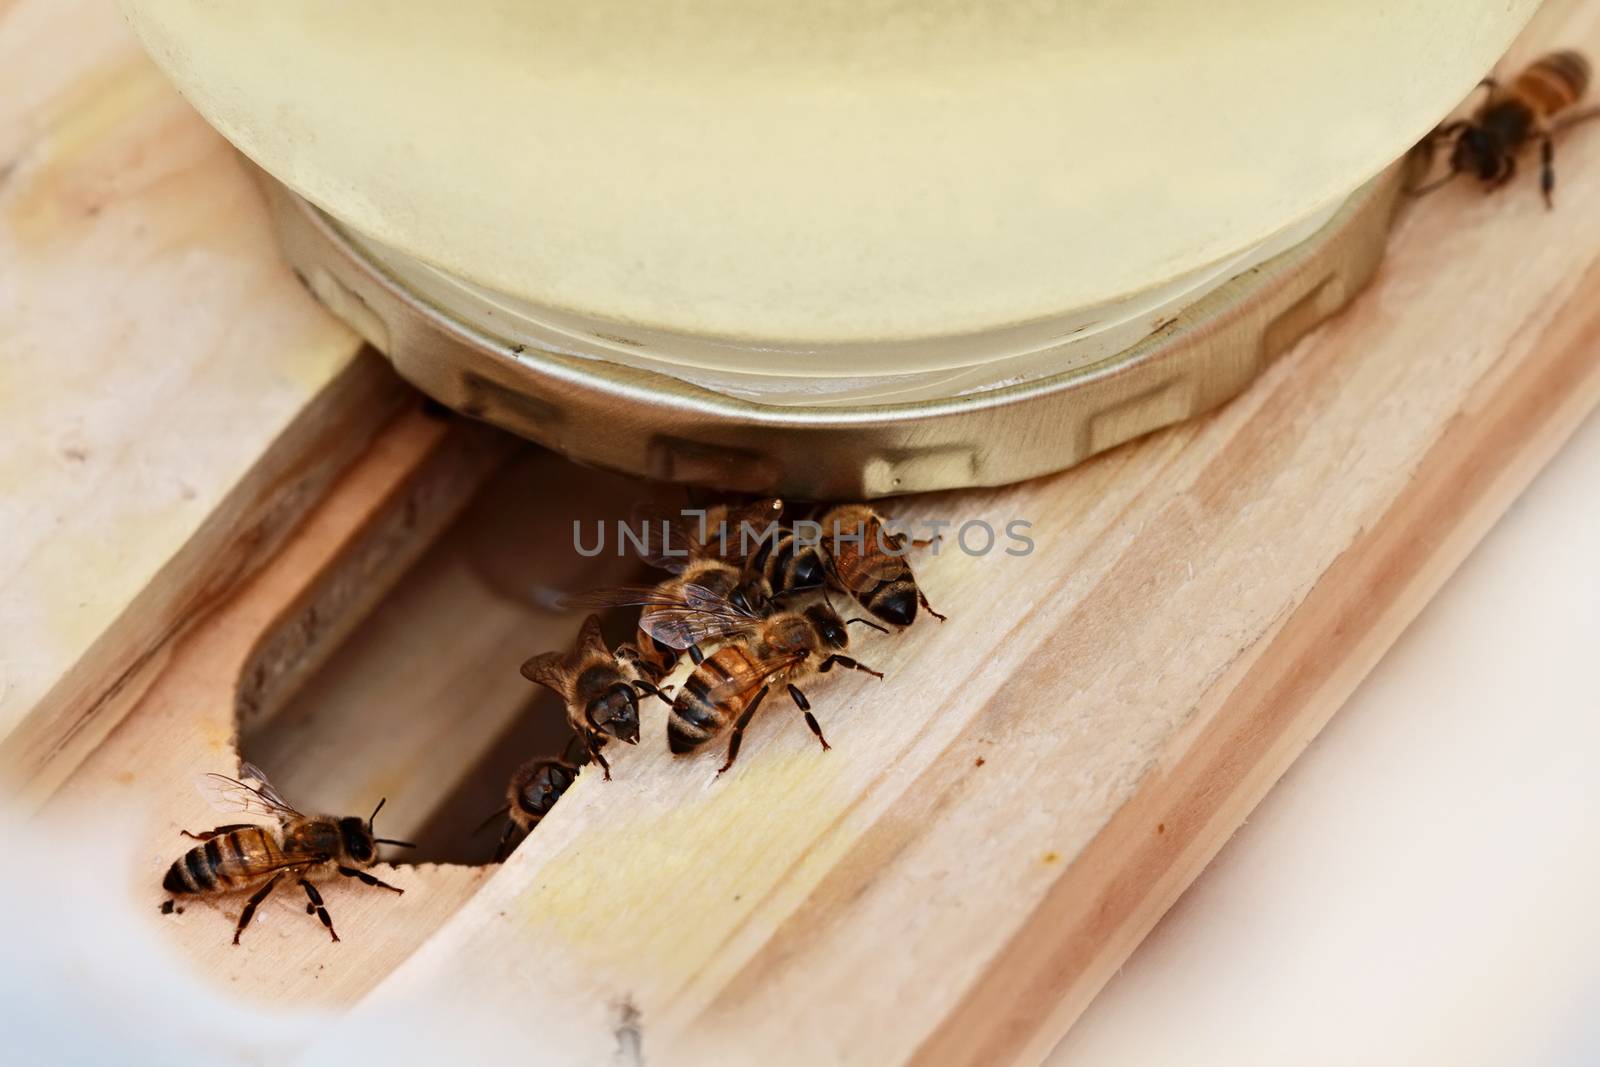 Honey bees feeding from a homemade feeder. Shallow depth of field.